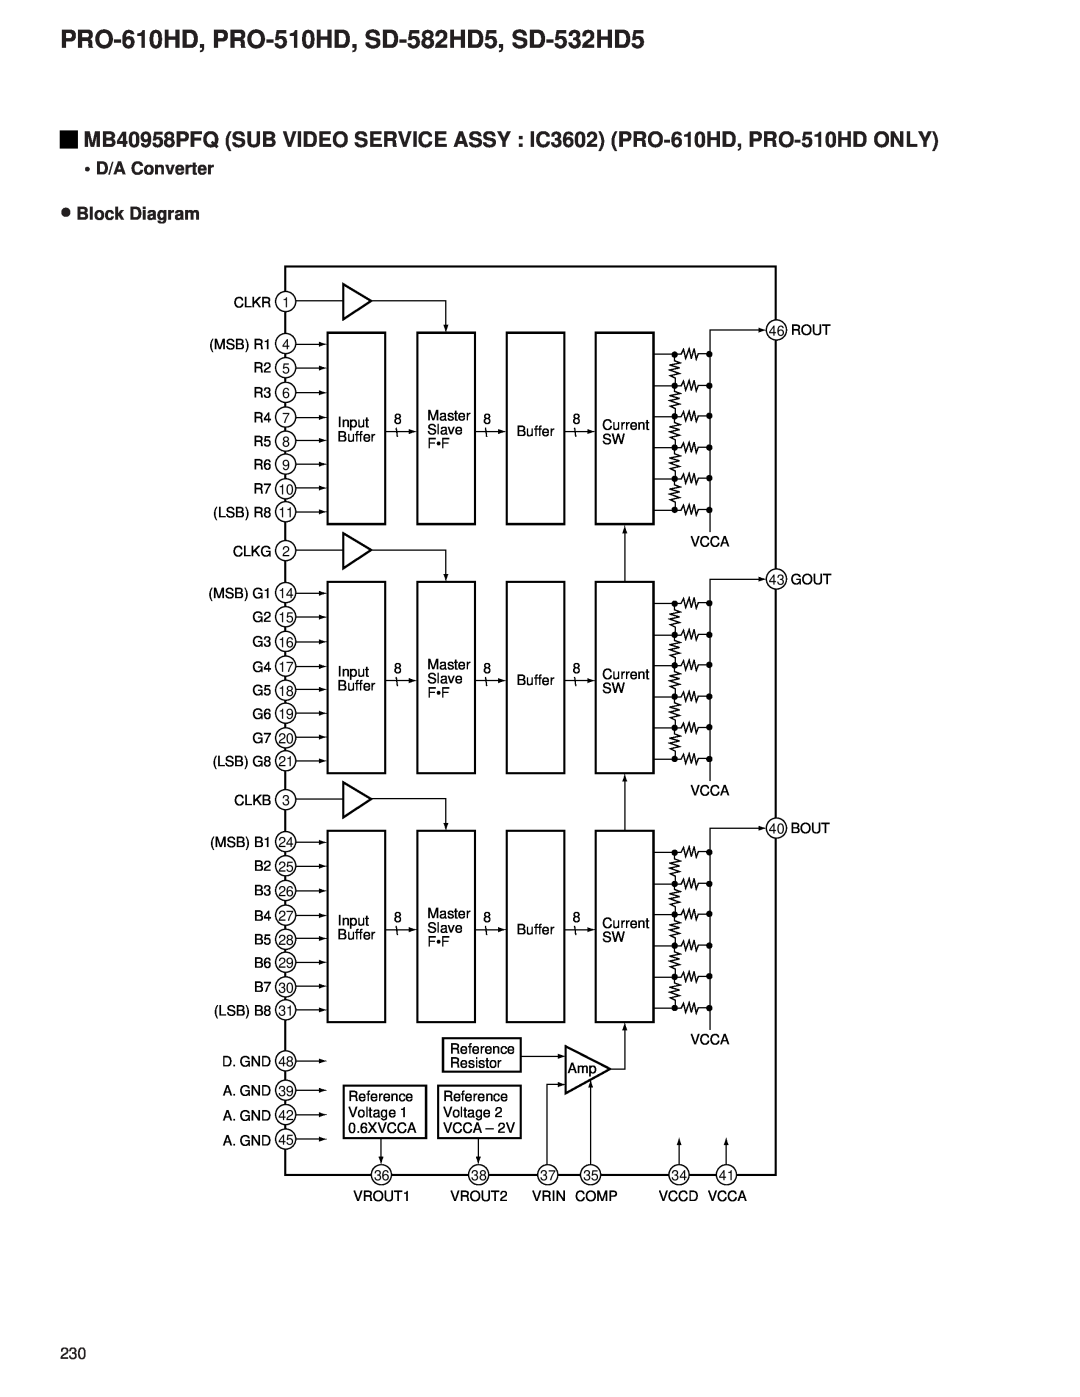 Pioneer service manual MB40958PFQ SUB VIDEO SERVICE ASSY IC3602 PRO-610HD, PRO-510HD ONLY, D/A Converter ∙ Block Diagram 